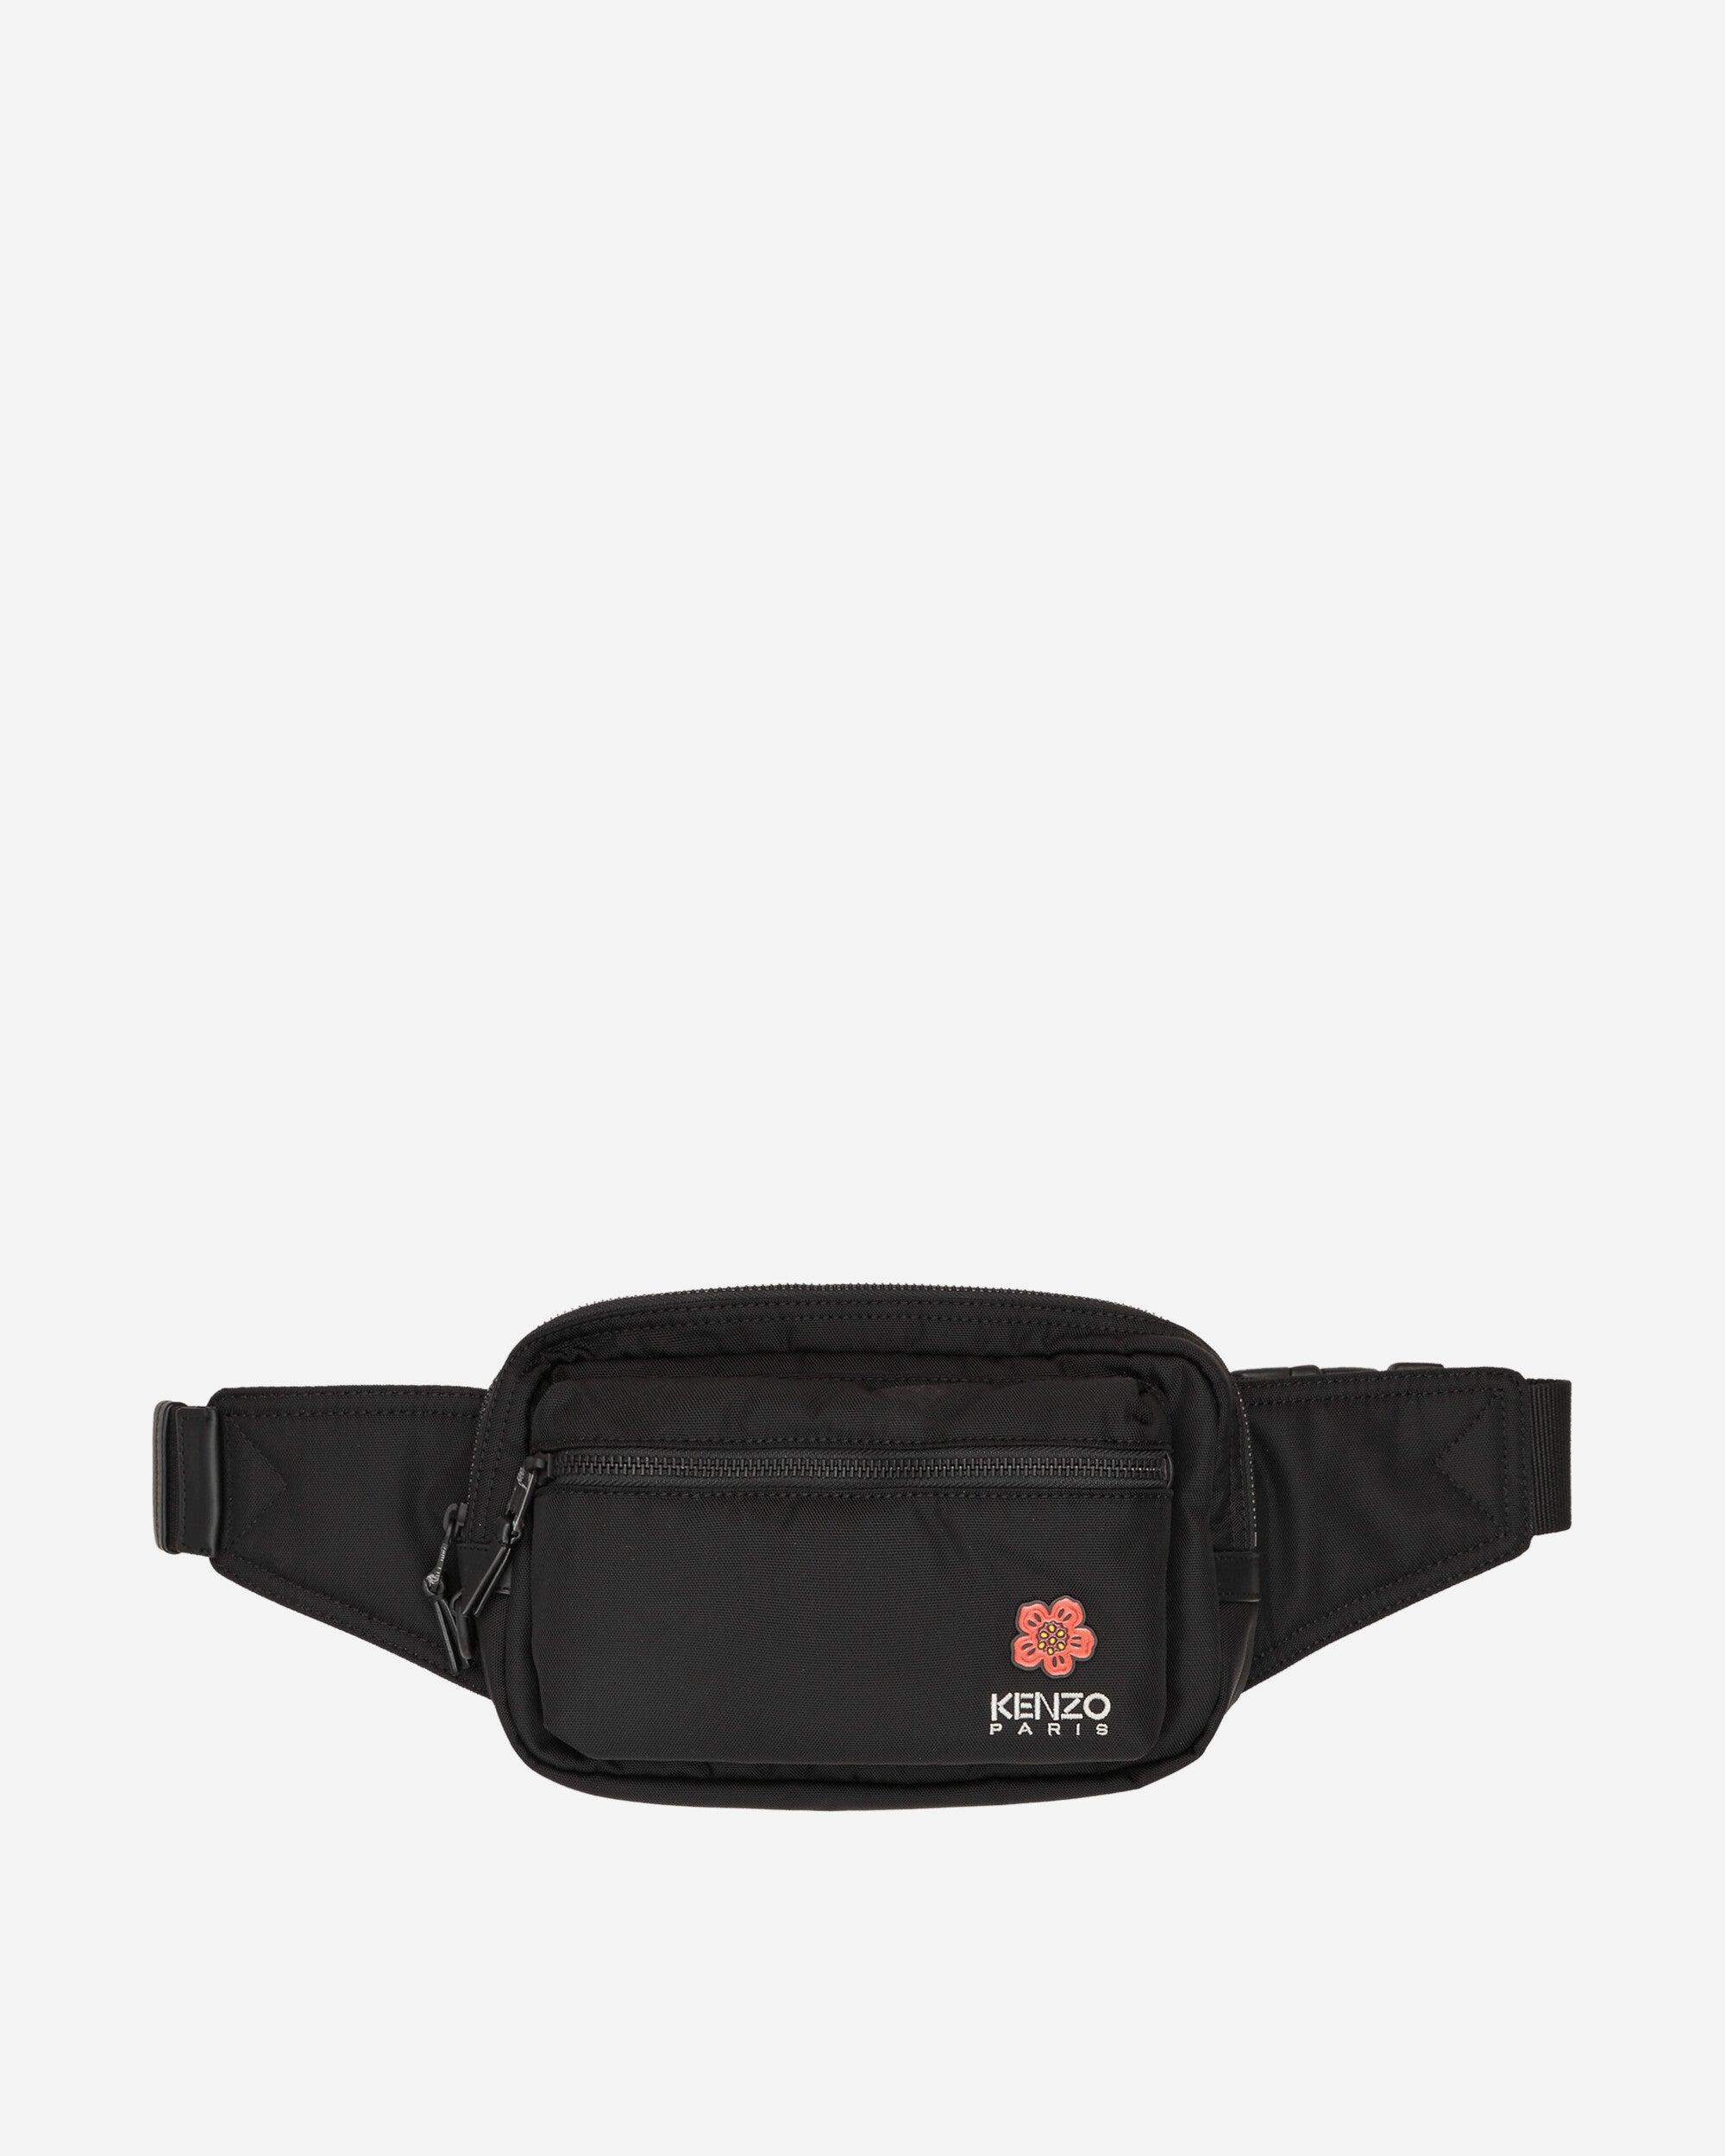 Kenzo Paris Crest Belt Bag in Black for Men | Lyst